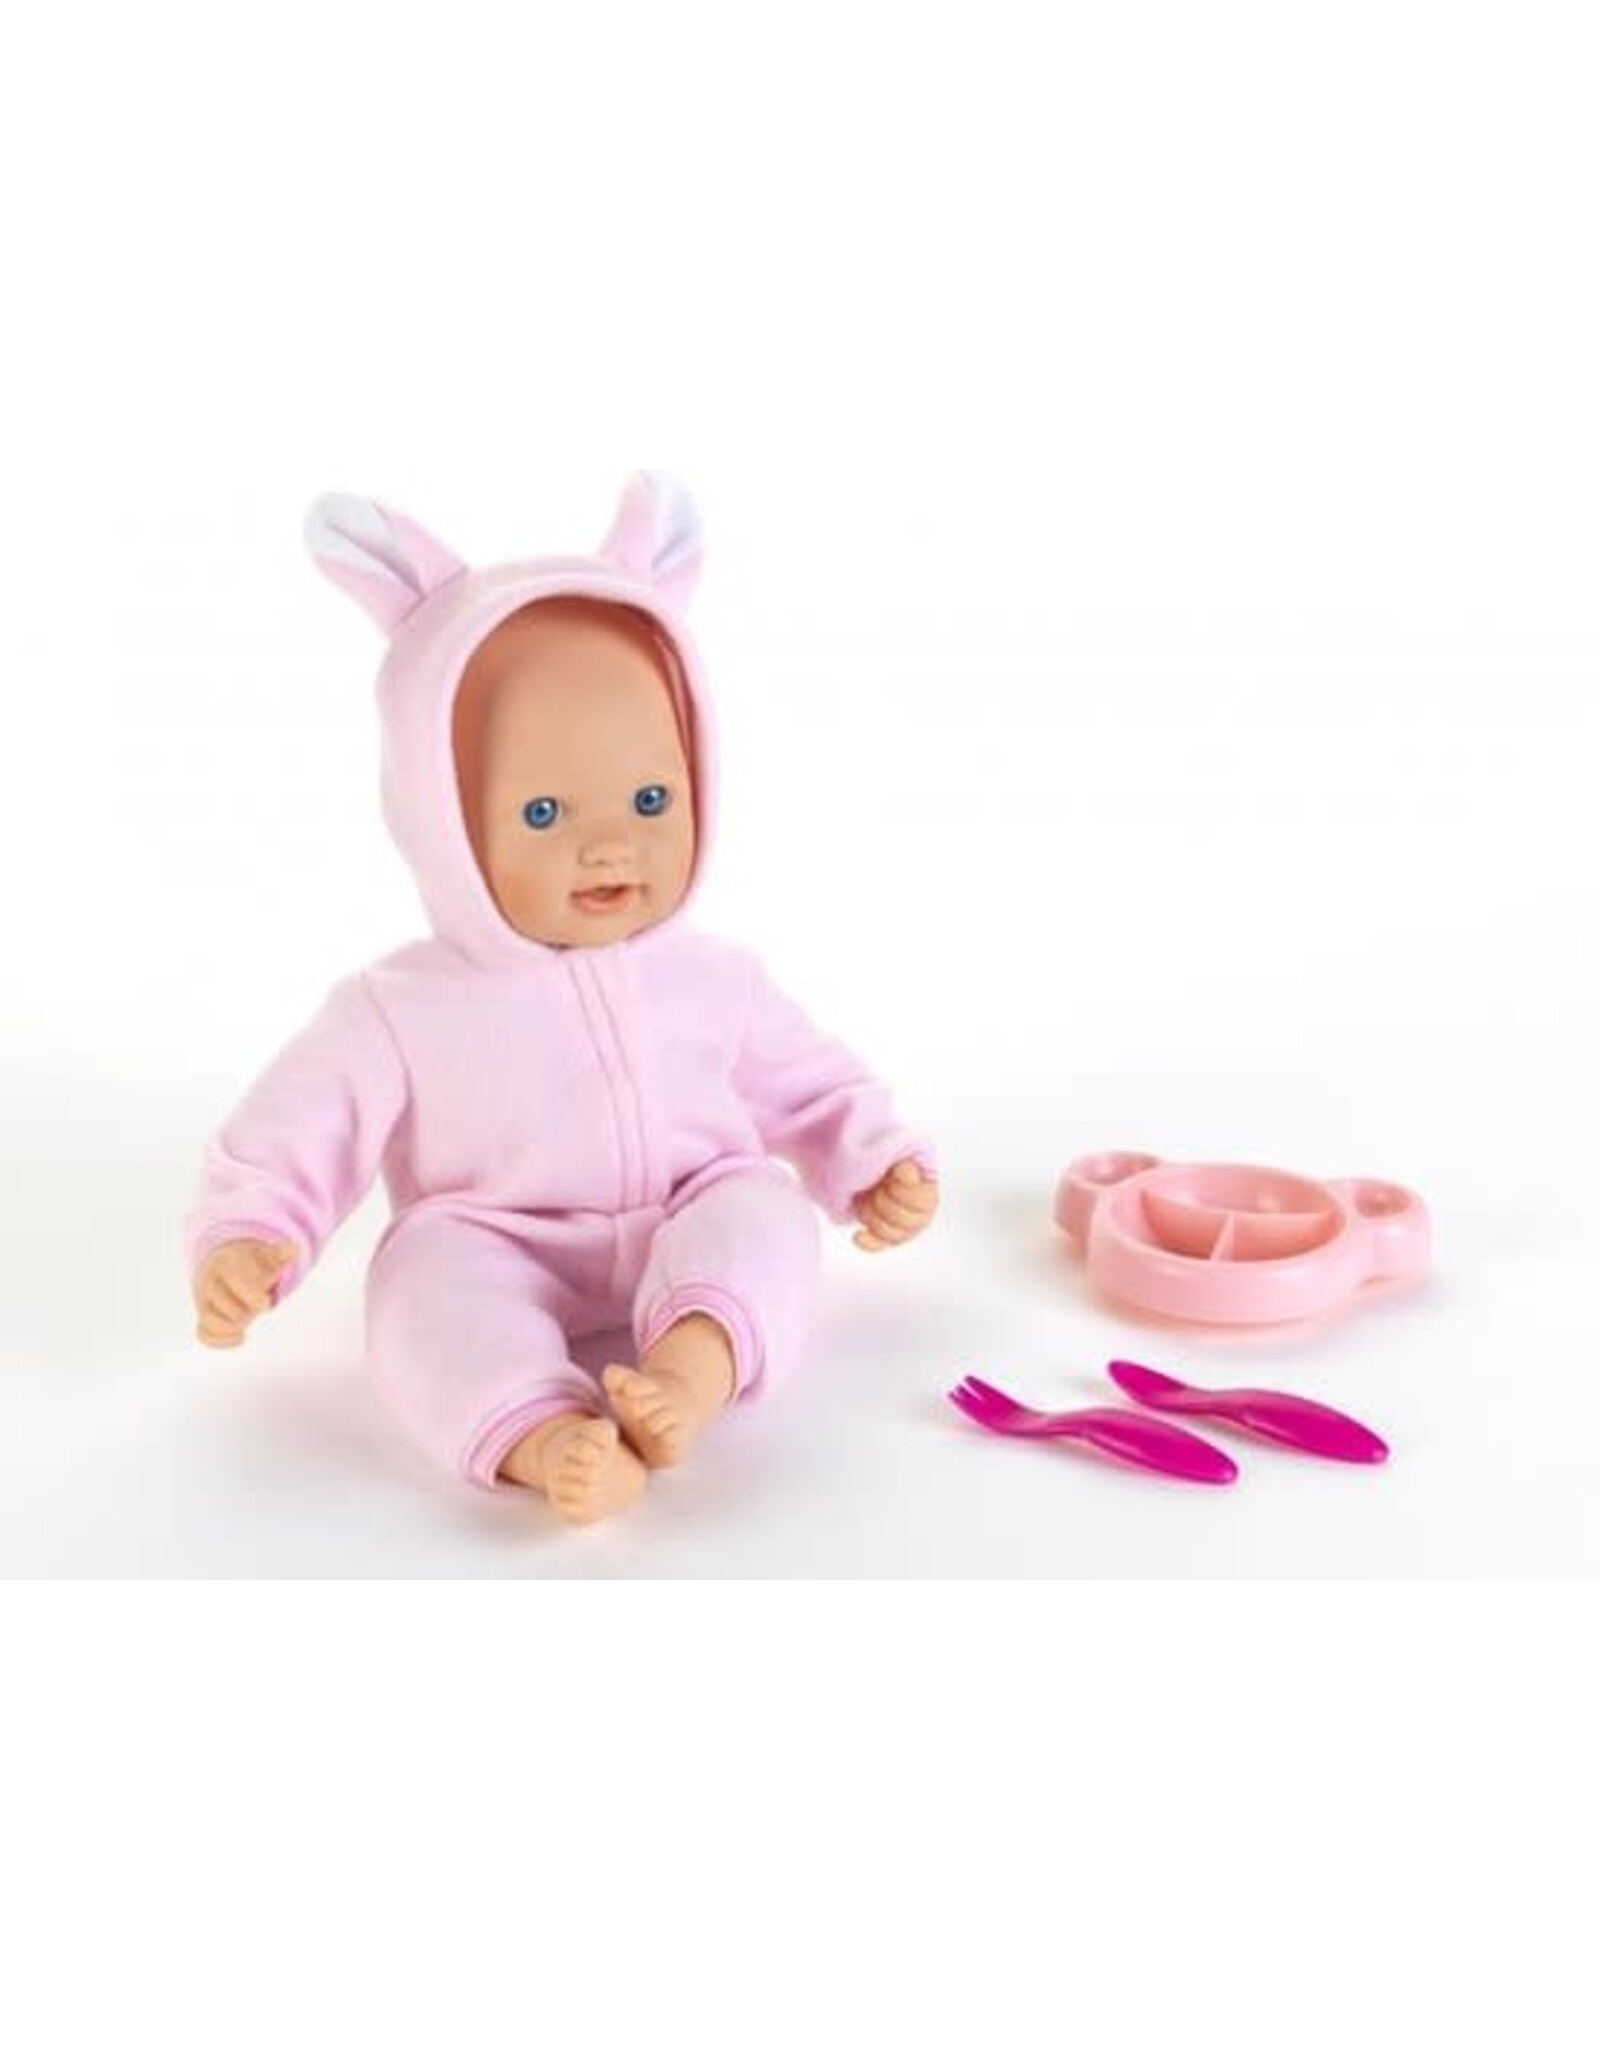 Klein Baby Coralie speelgoed knuffelbaby